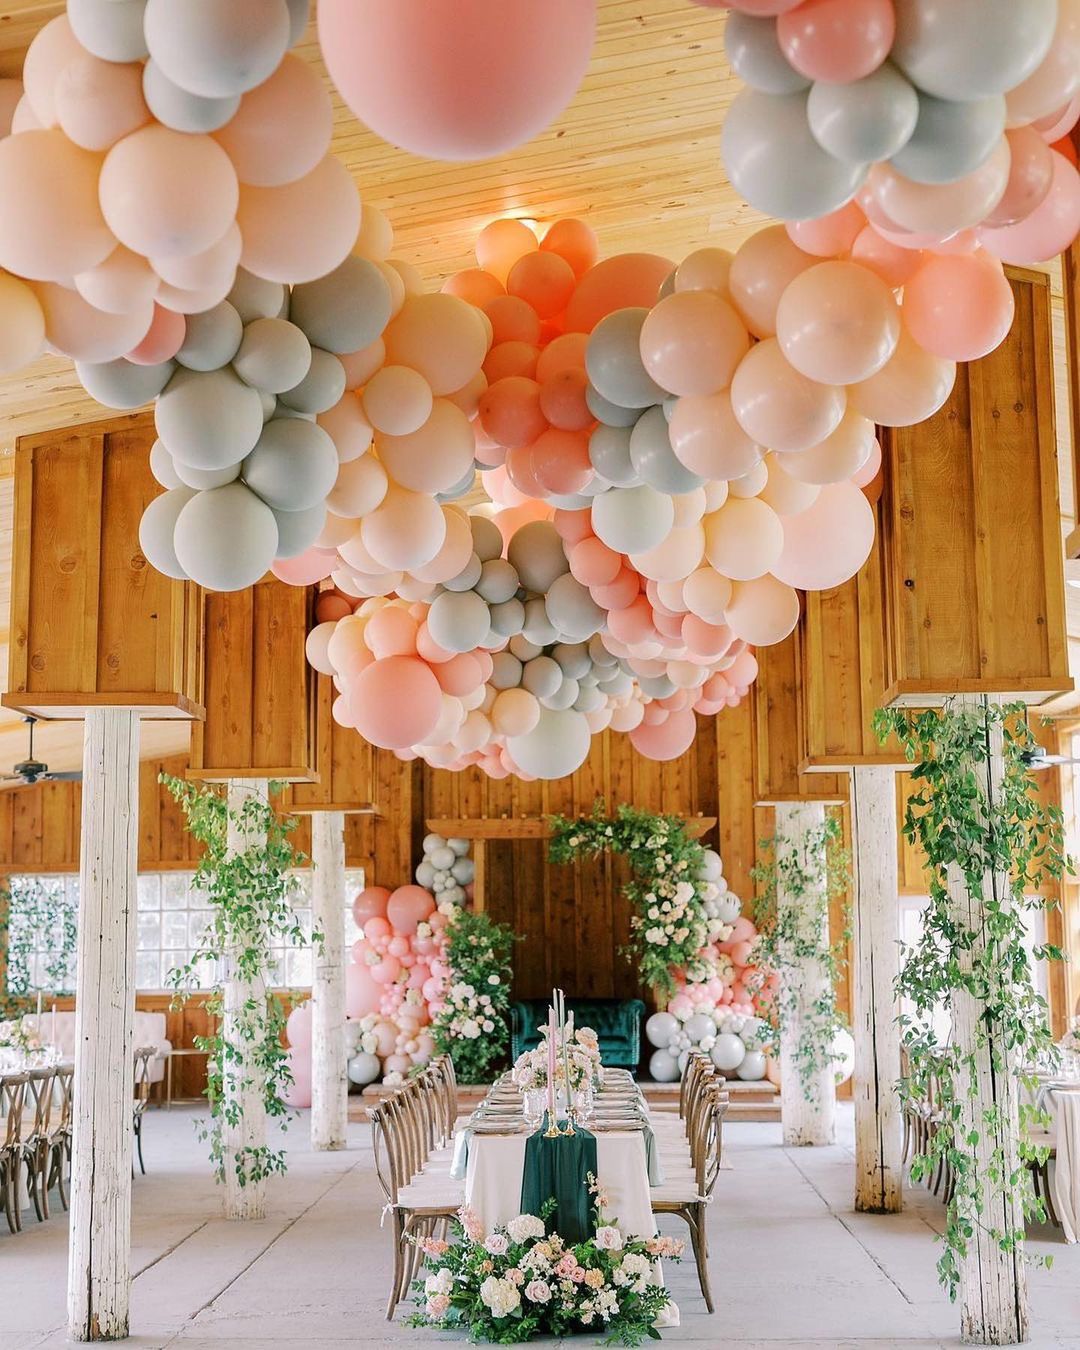 wedding balloon decorations decor for fairy reception ideas